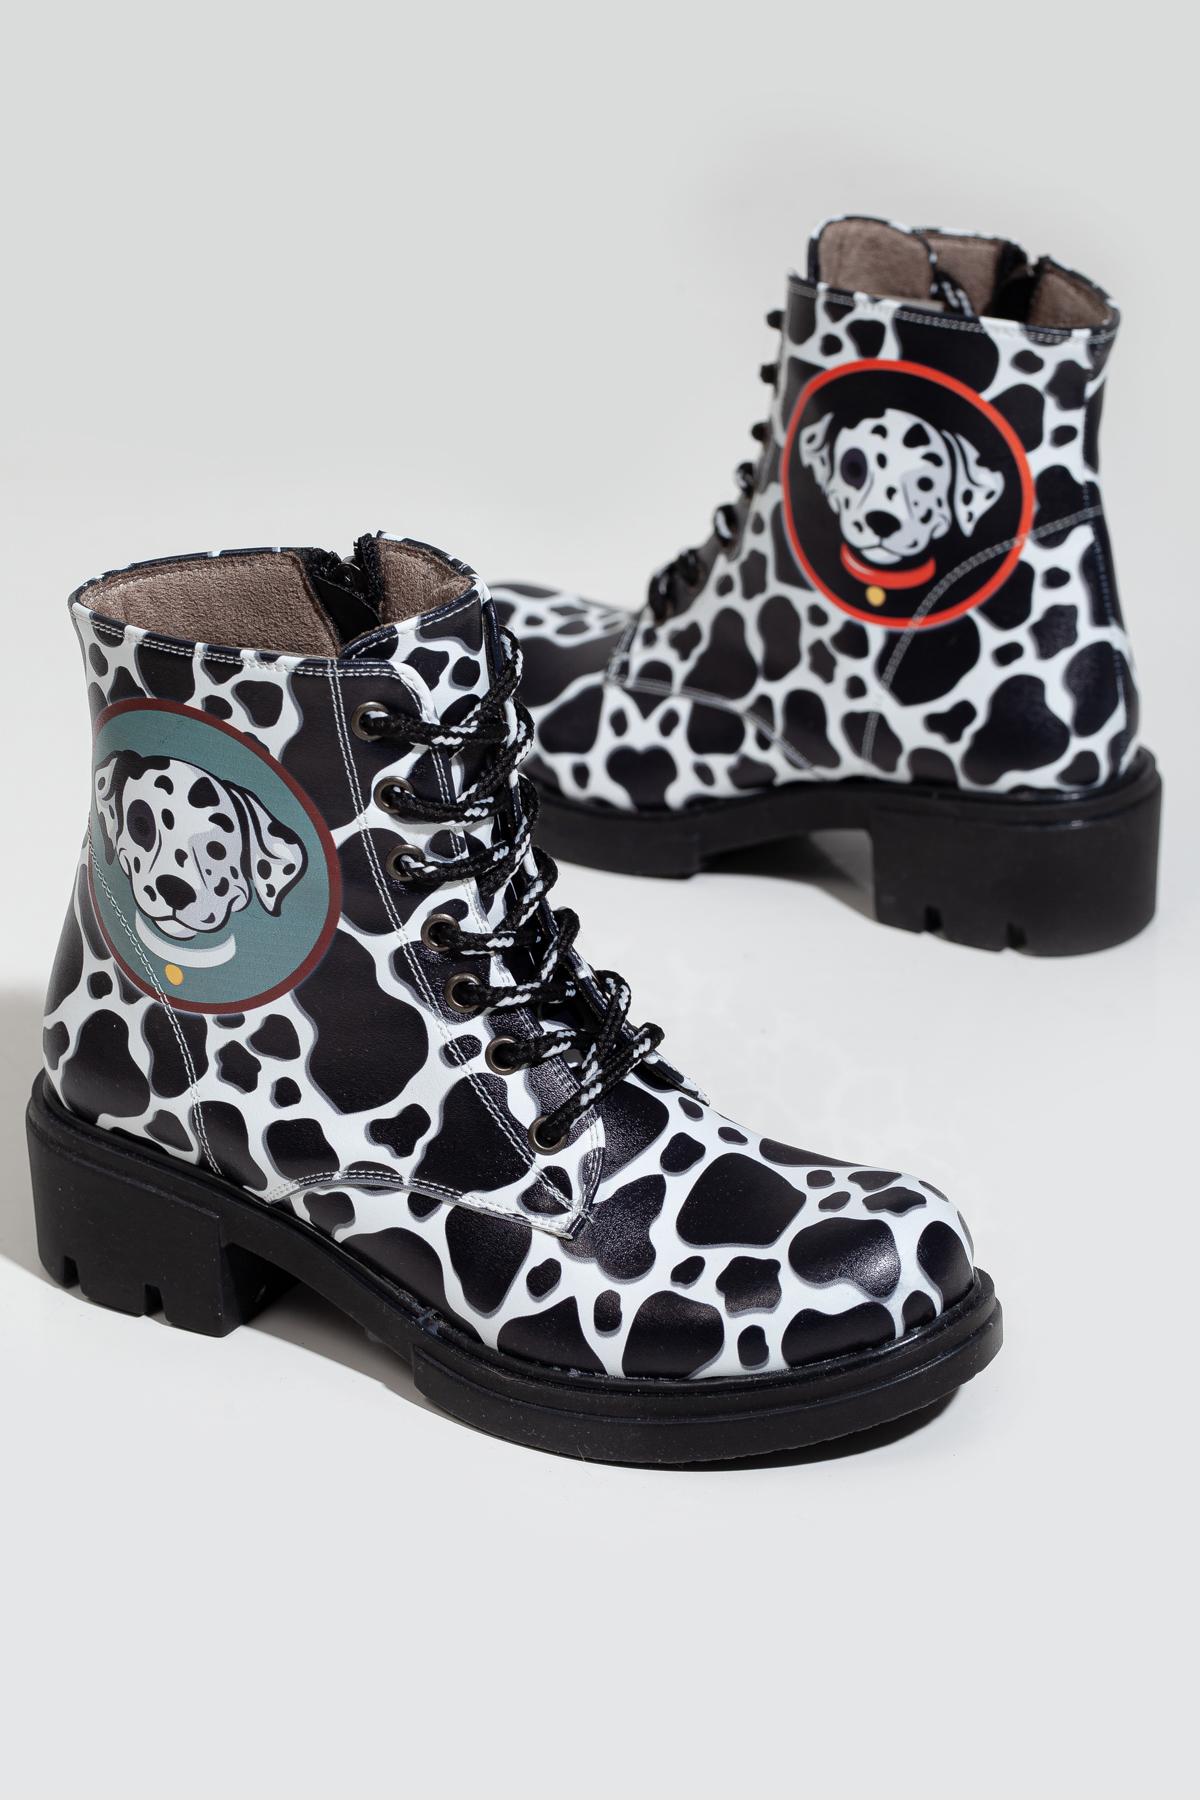 Black and white dalmatian dog print boots